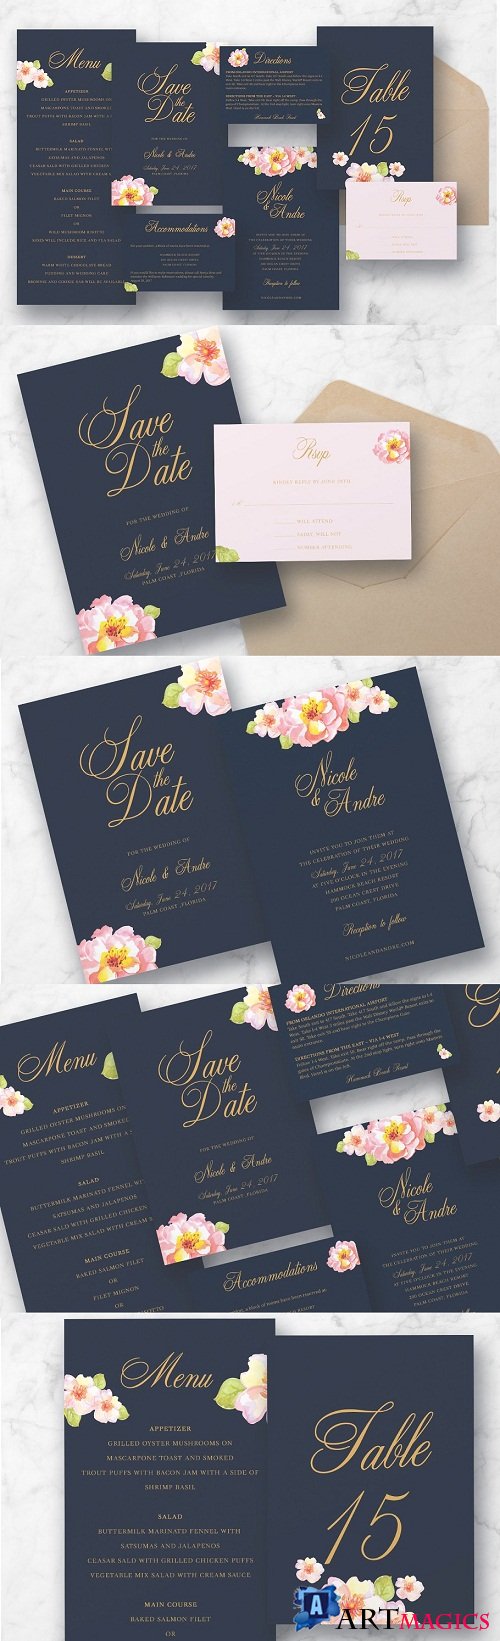 Pink Floral Wedding Suite - 1409210